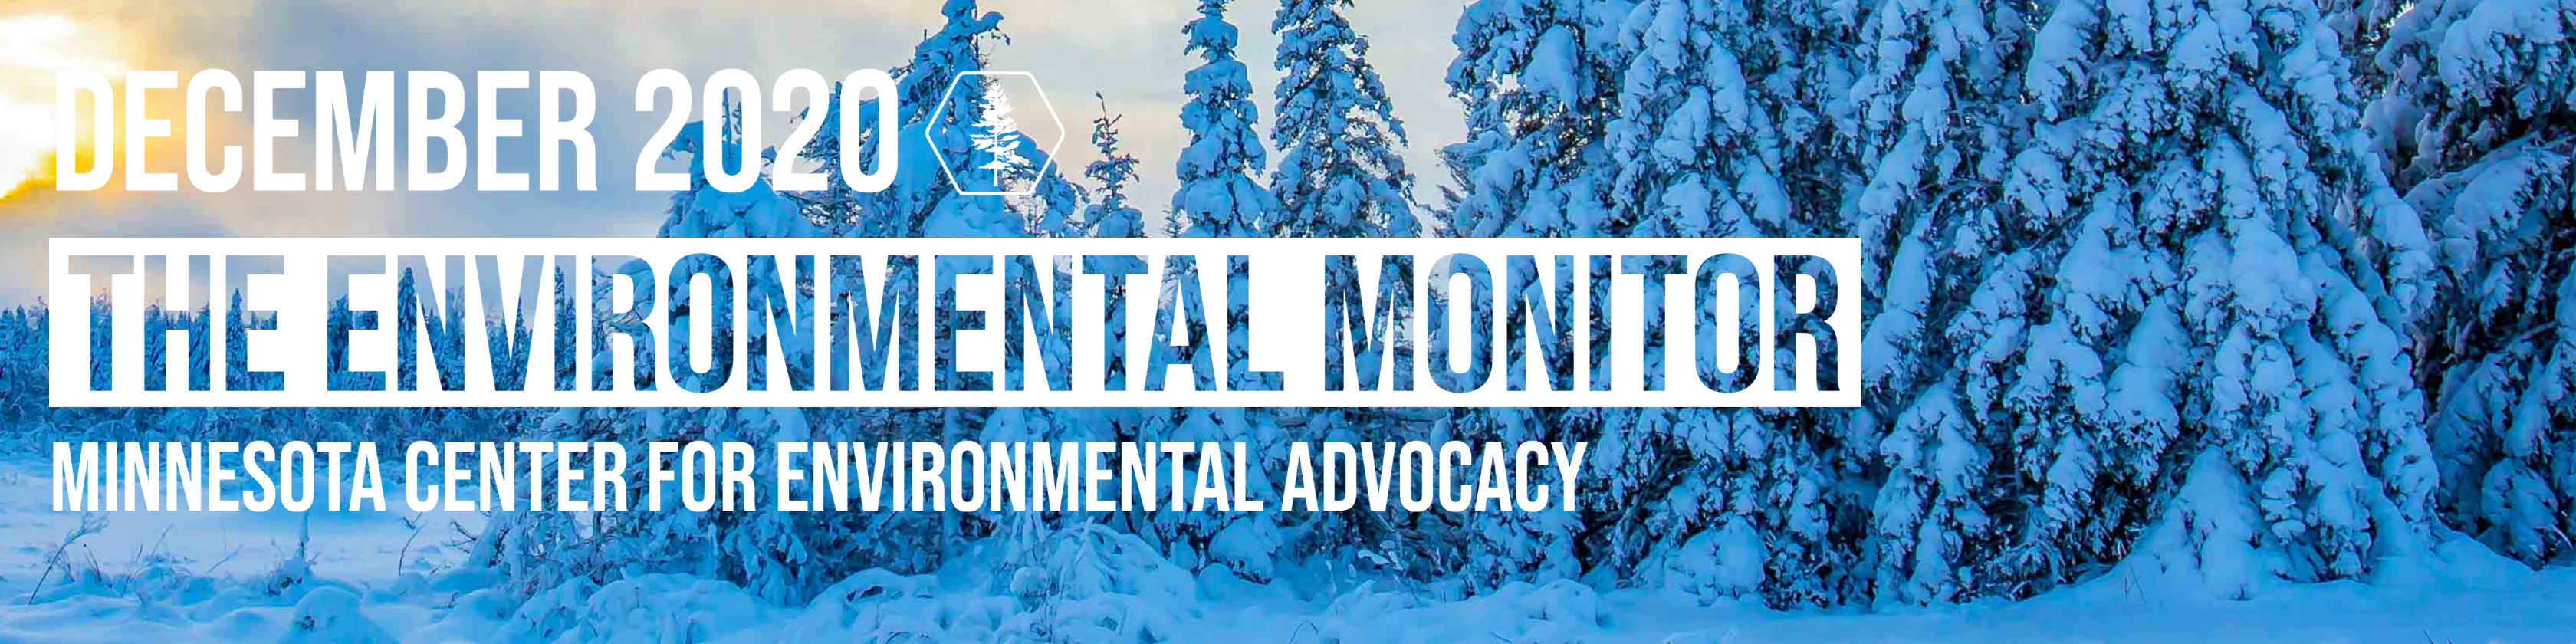 December 2020 The Environmental Monitor